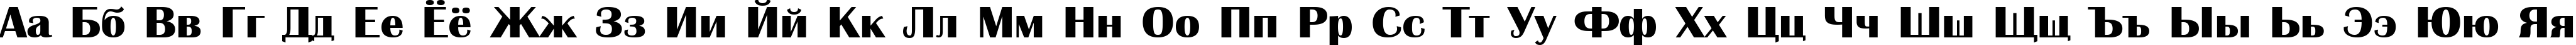 Пример написания русского алфавита шрифтом a_AlbionicExp Bold